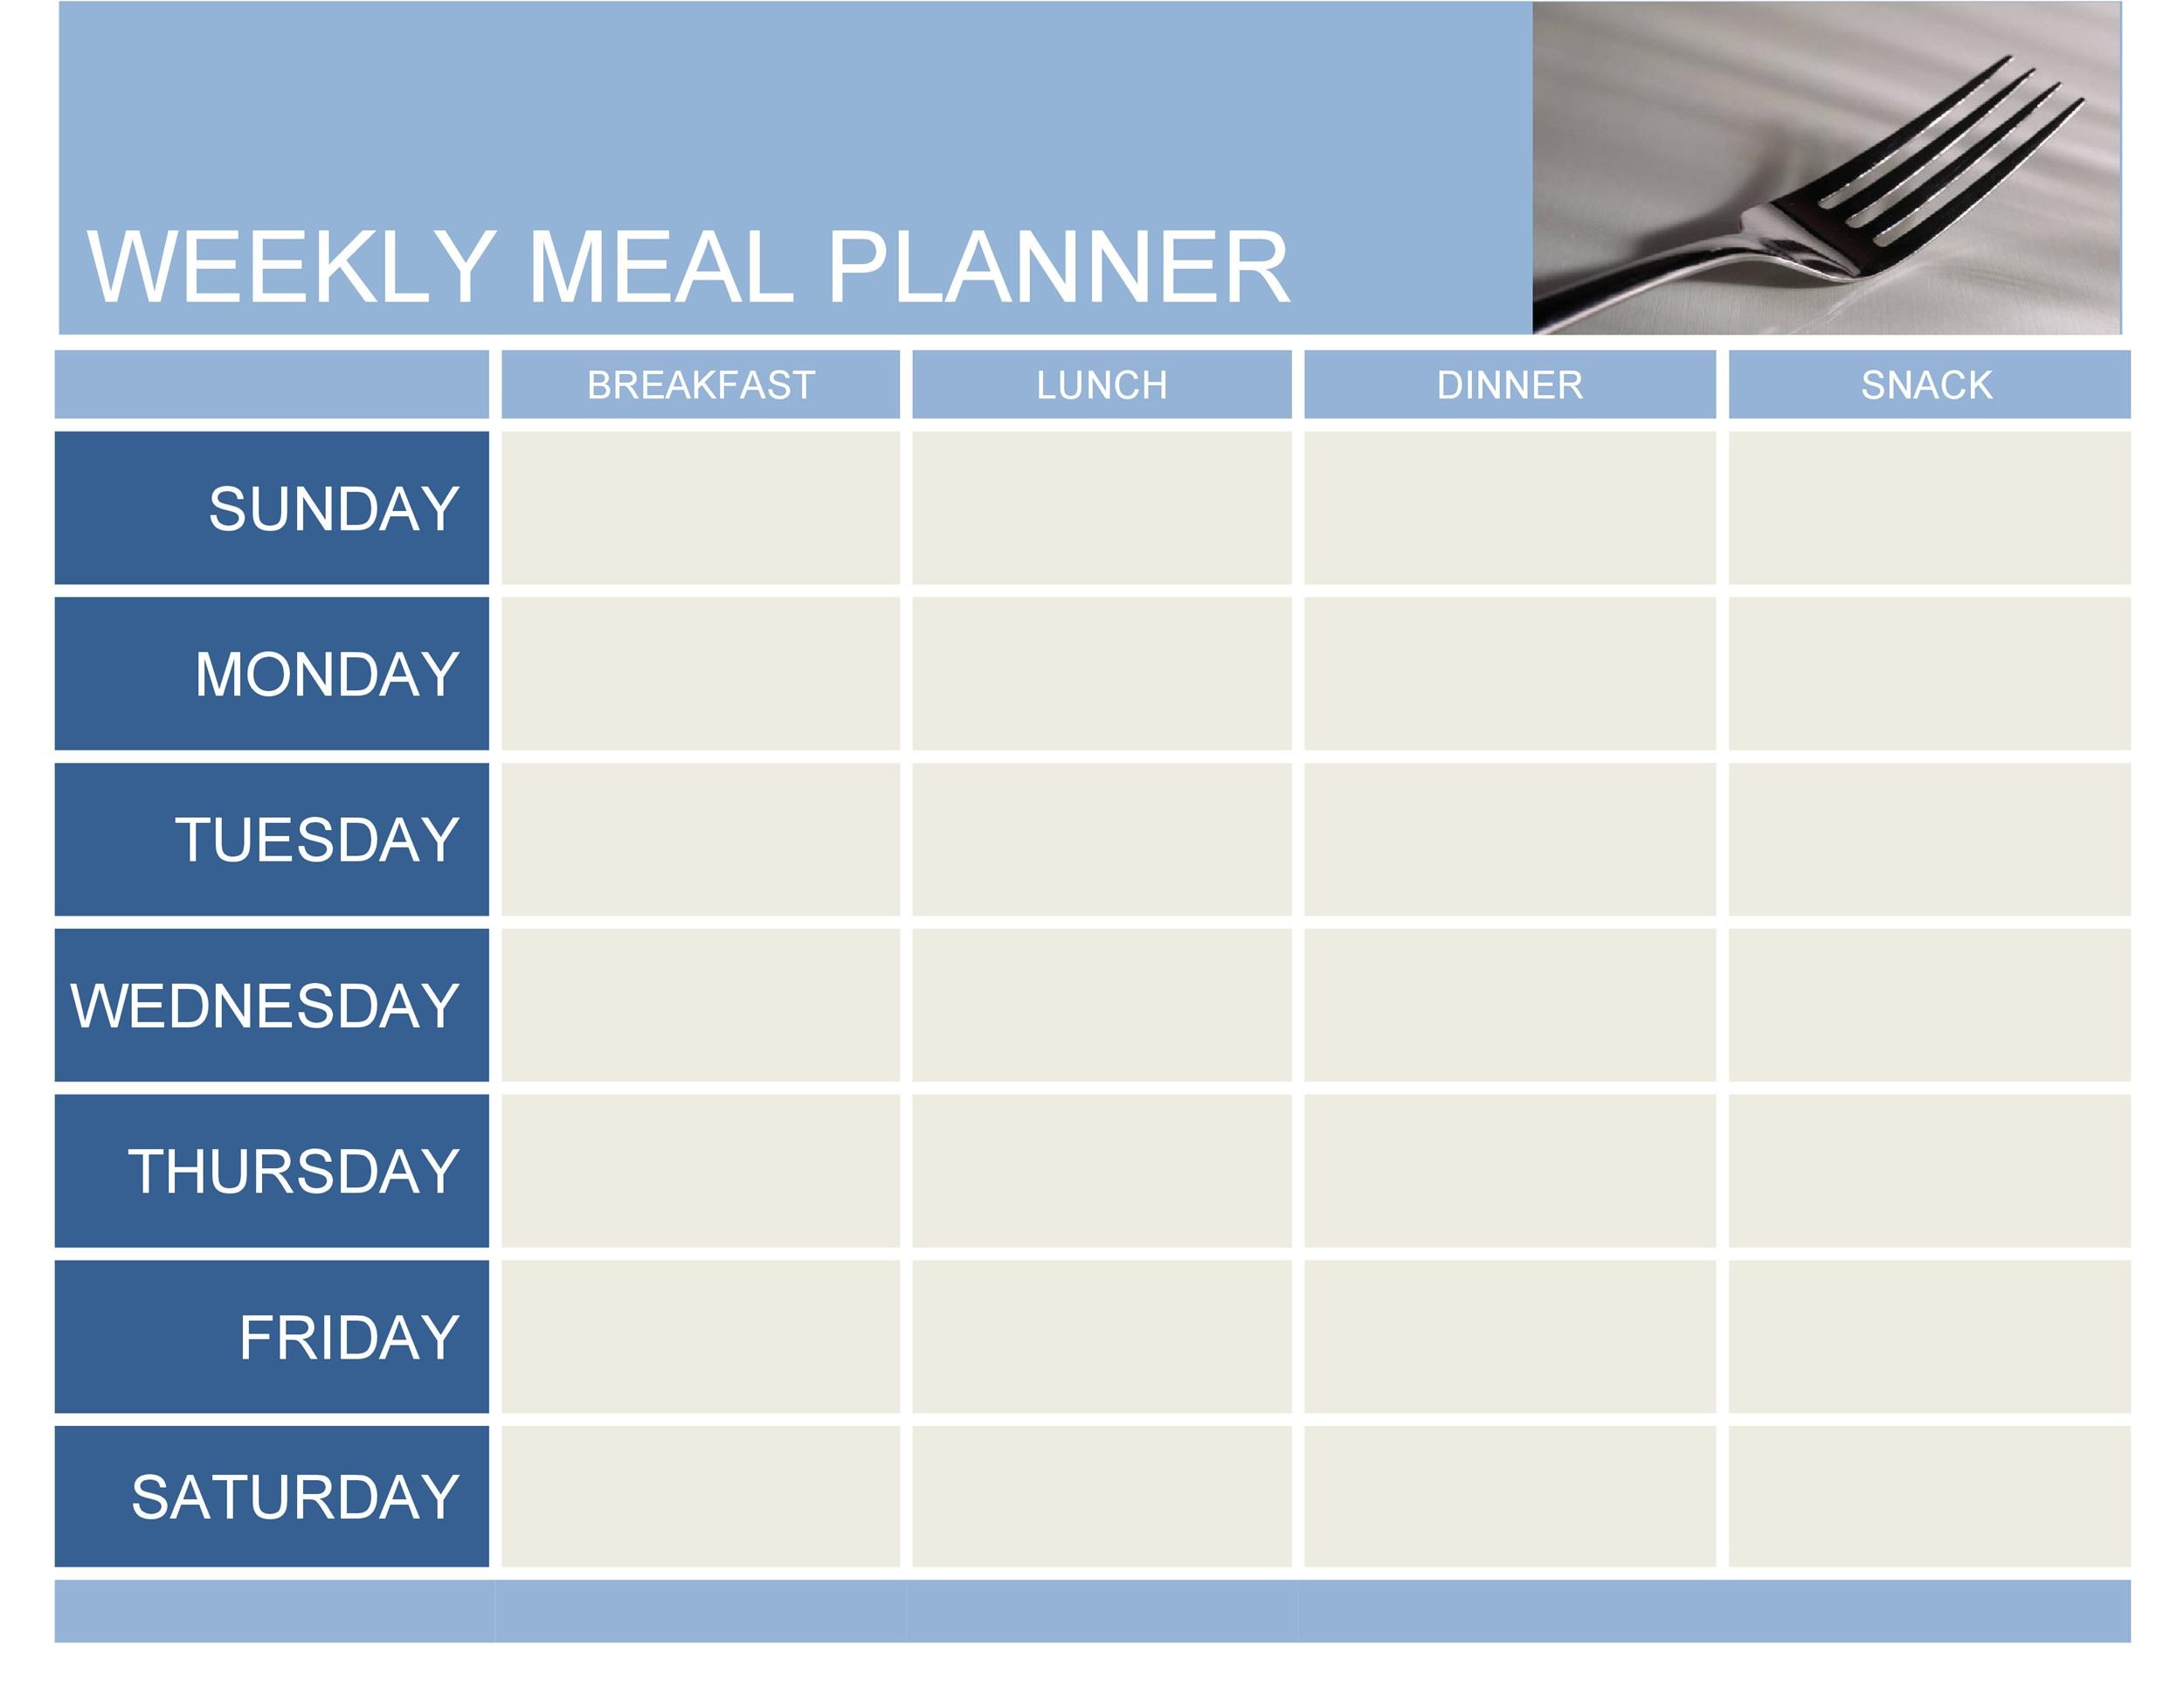 Weekly Eating Plan Template SampleTemplatess SampleTemplatess